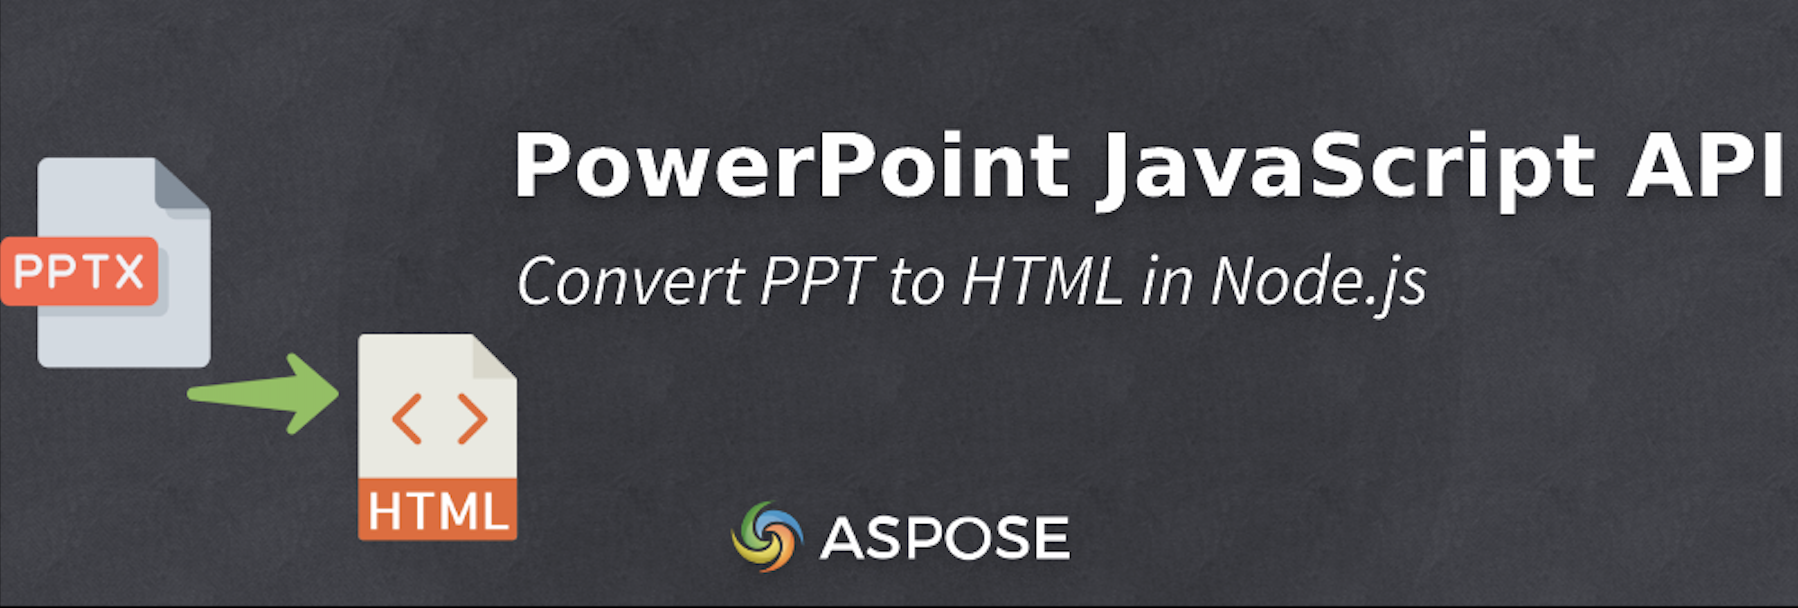 تبدیل PPT به HTML در Node.js - PowerPoint JavaScript API